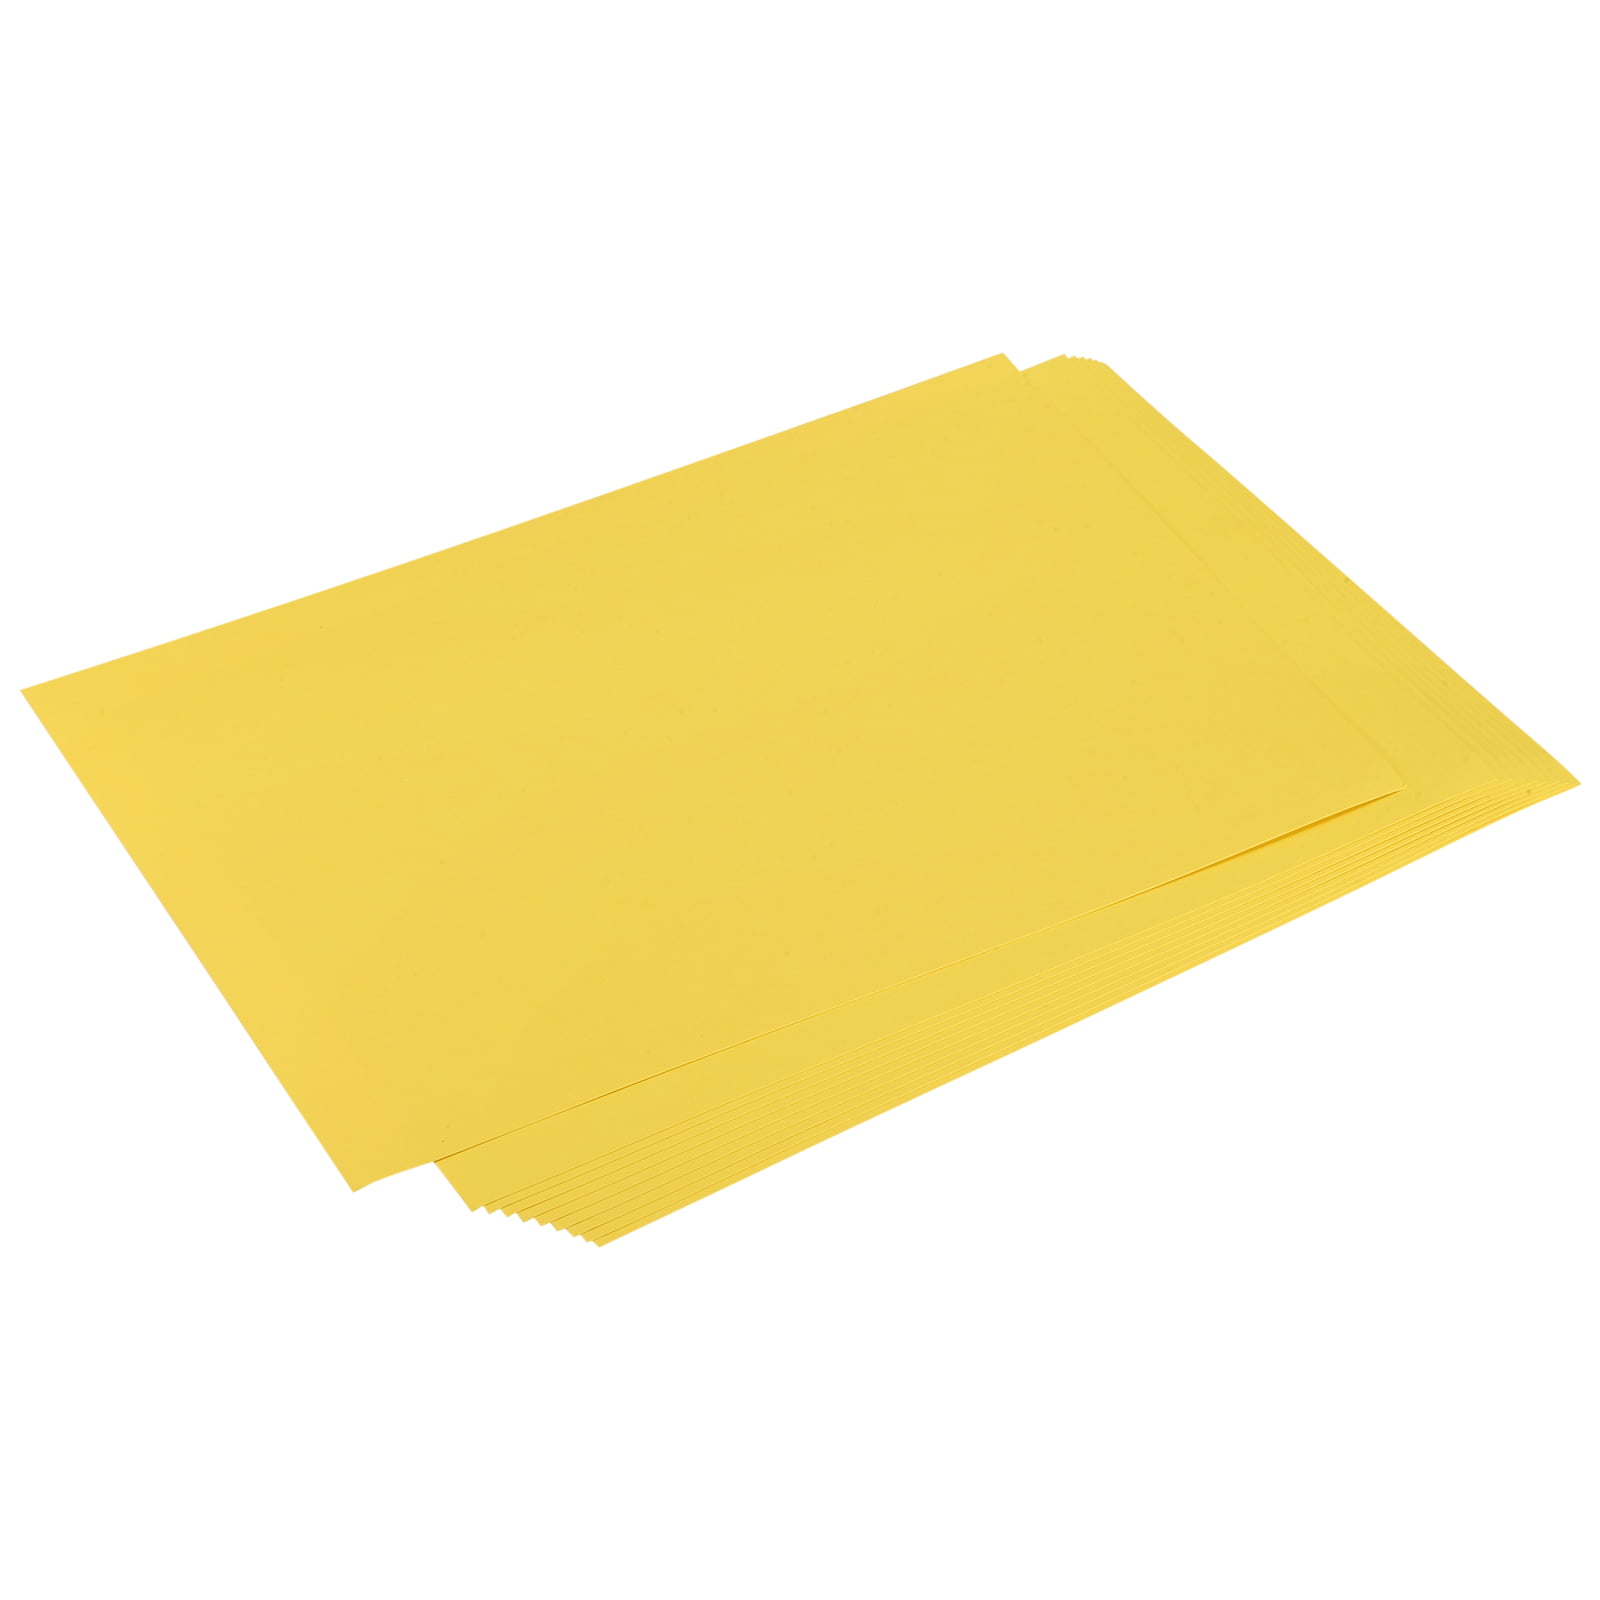 Paper Accents Cardstock 8.5 in. x 11 in. Stash Builder 65 lb Raincoat Yellow 25 PC